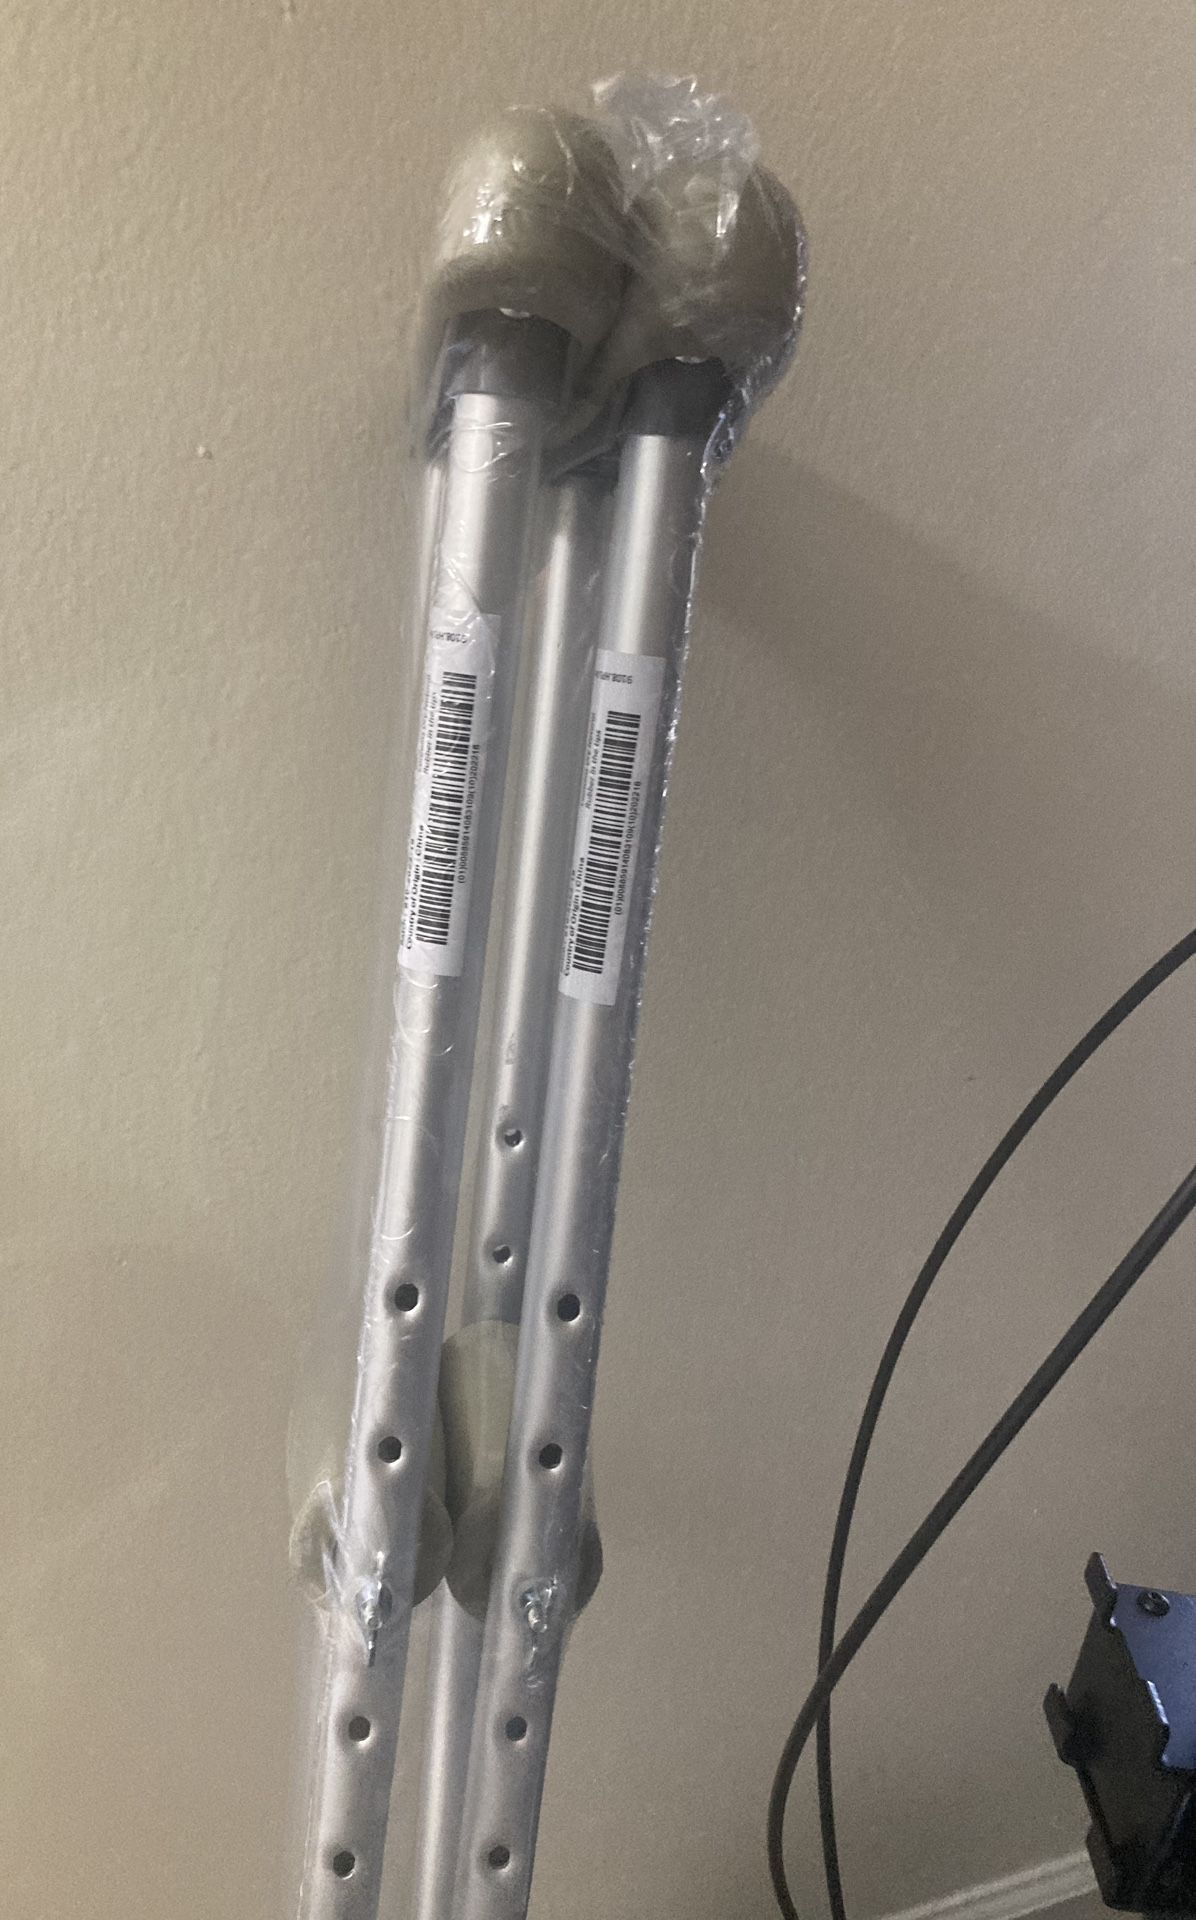 Unused Crutches